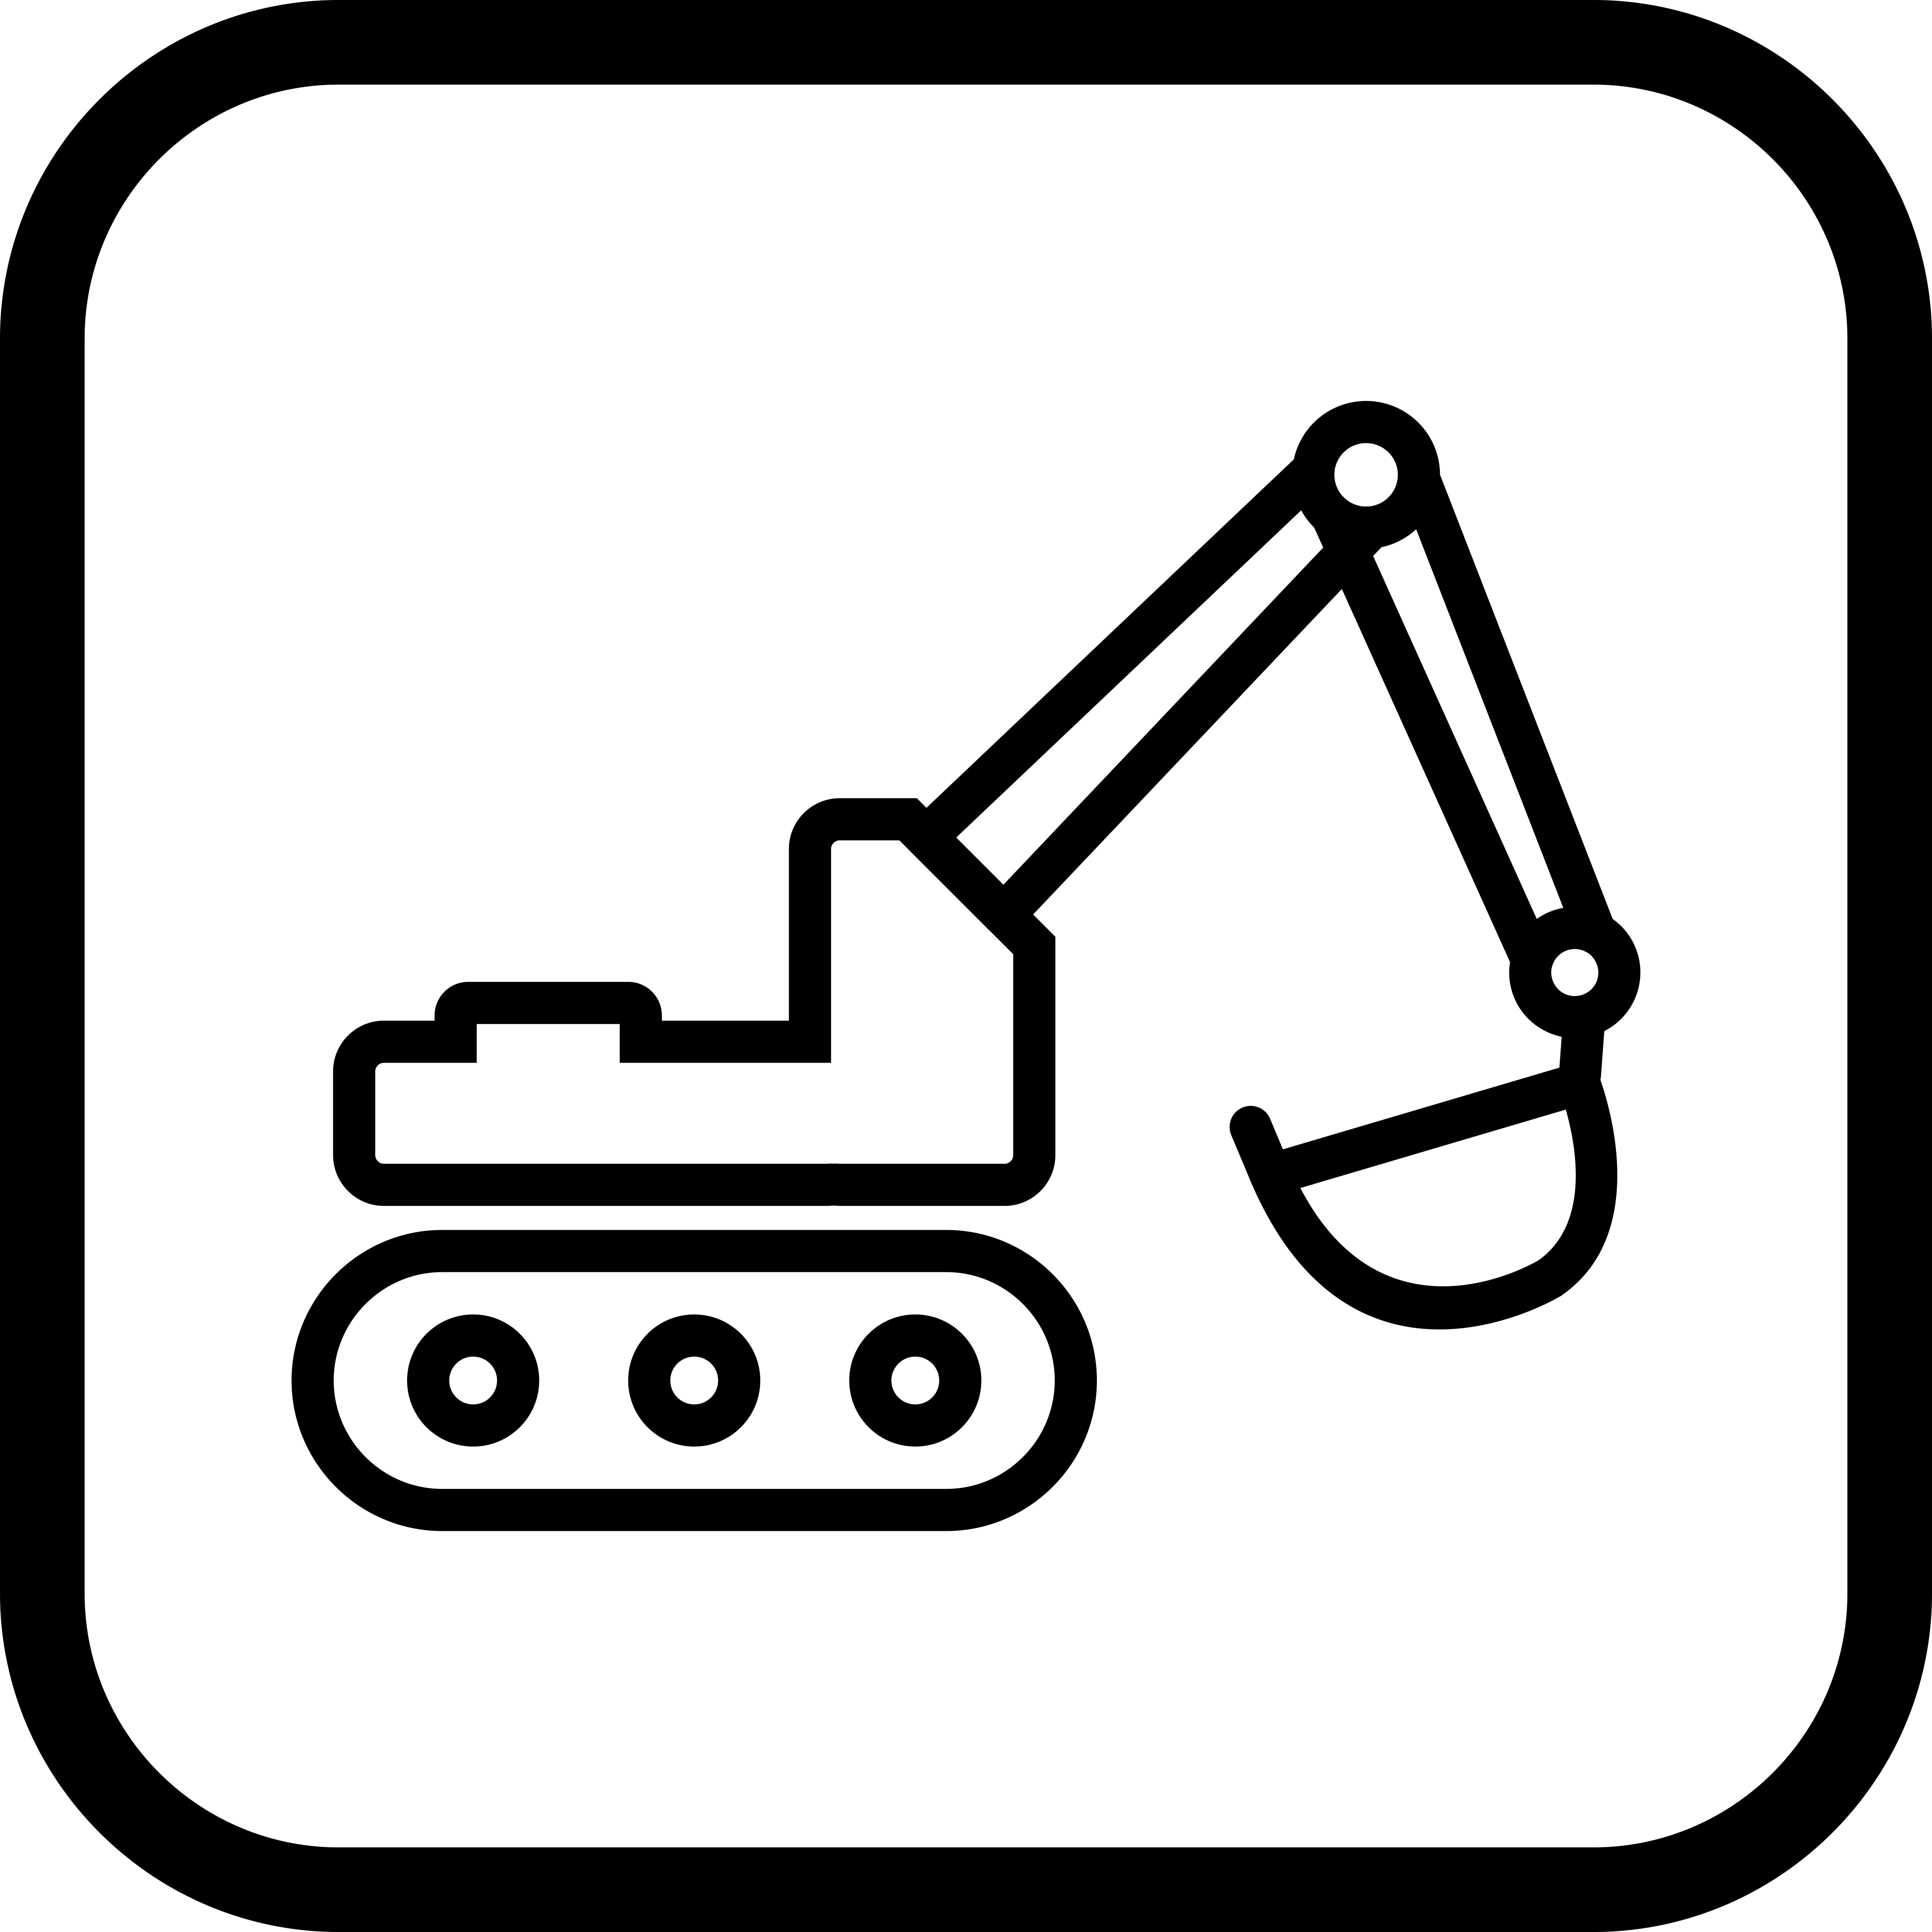 Download Excavator Icon Design - Download Free Vectors, Clipart ...